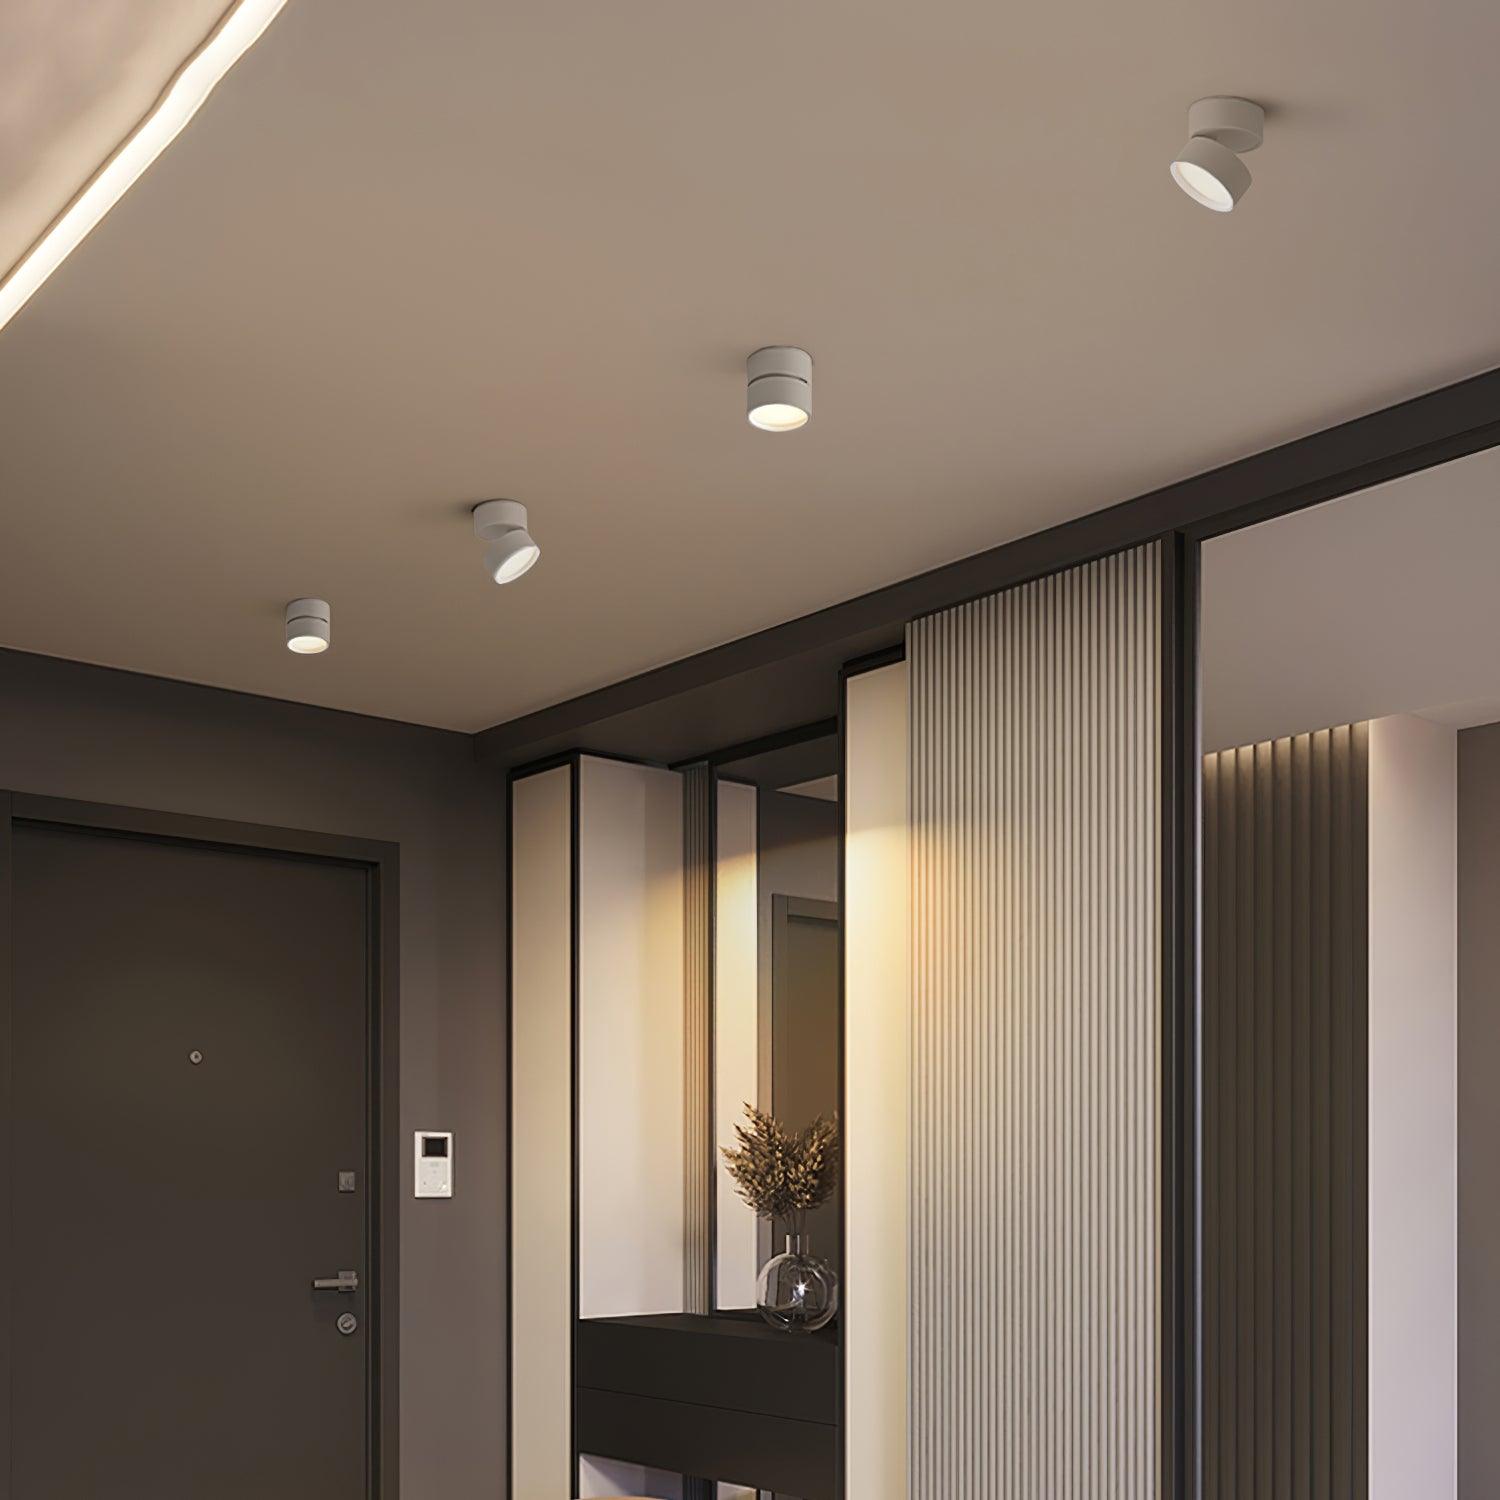 Favilla Surface Ceiling Lamp 3.9″ - Docos